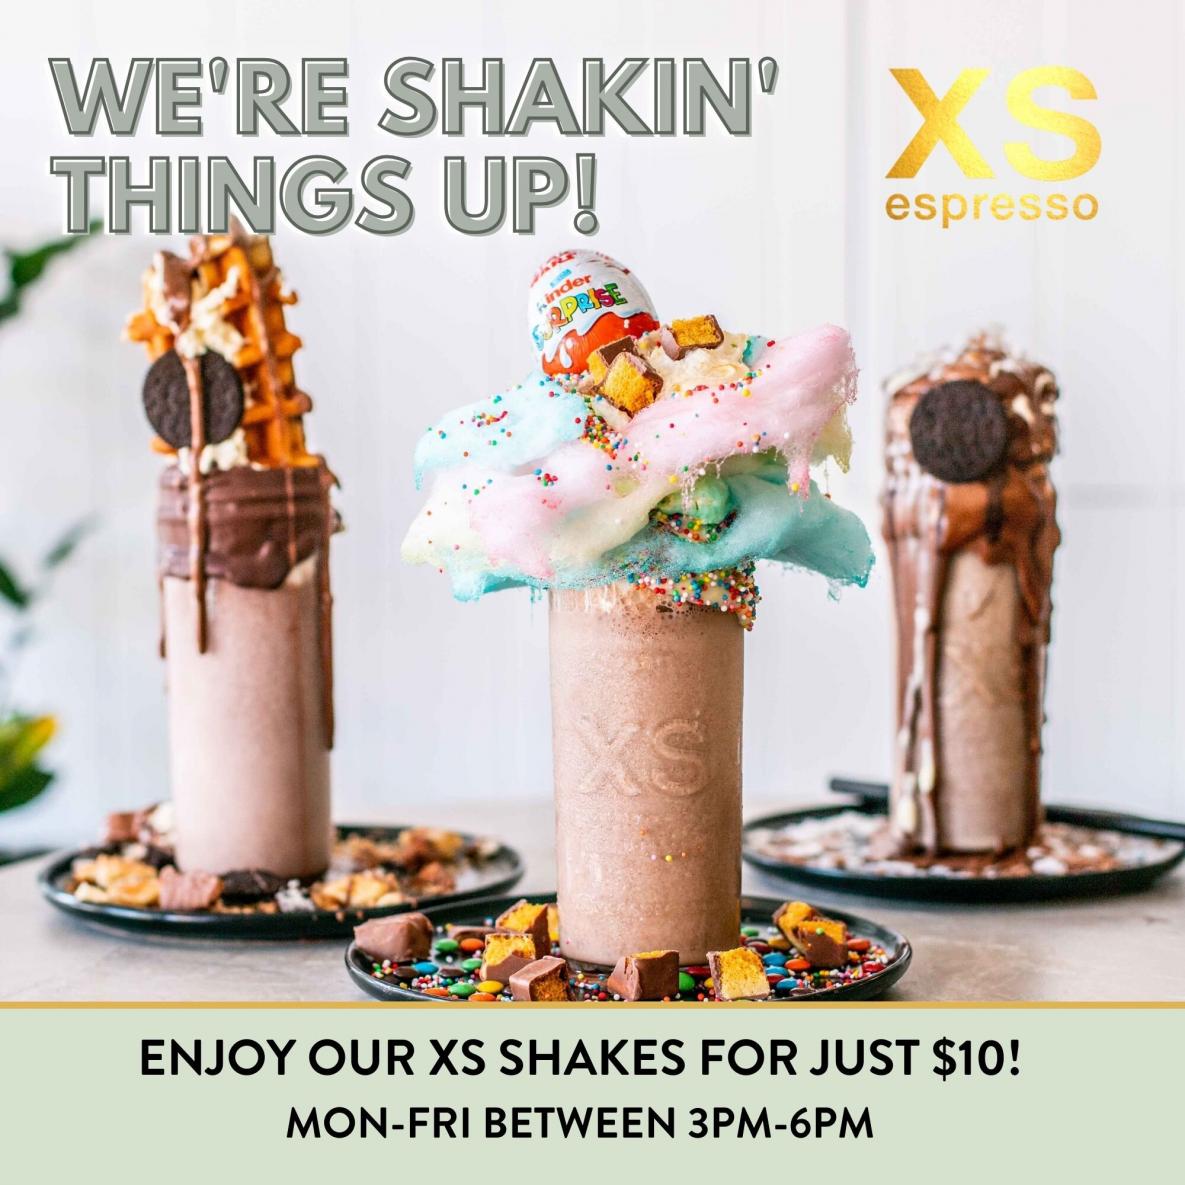 XS Espresso $10 shake offer